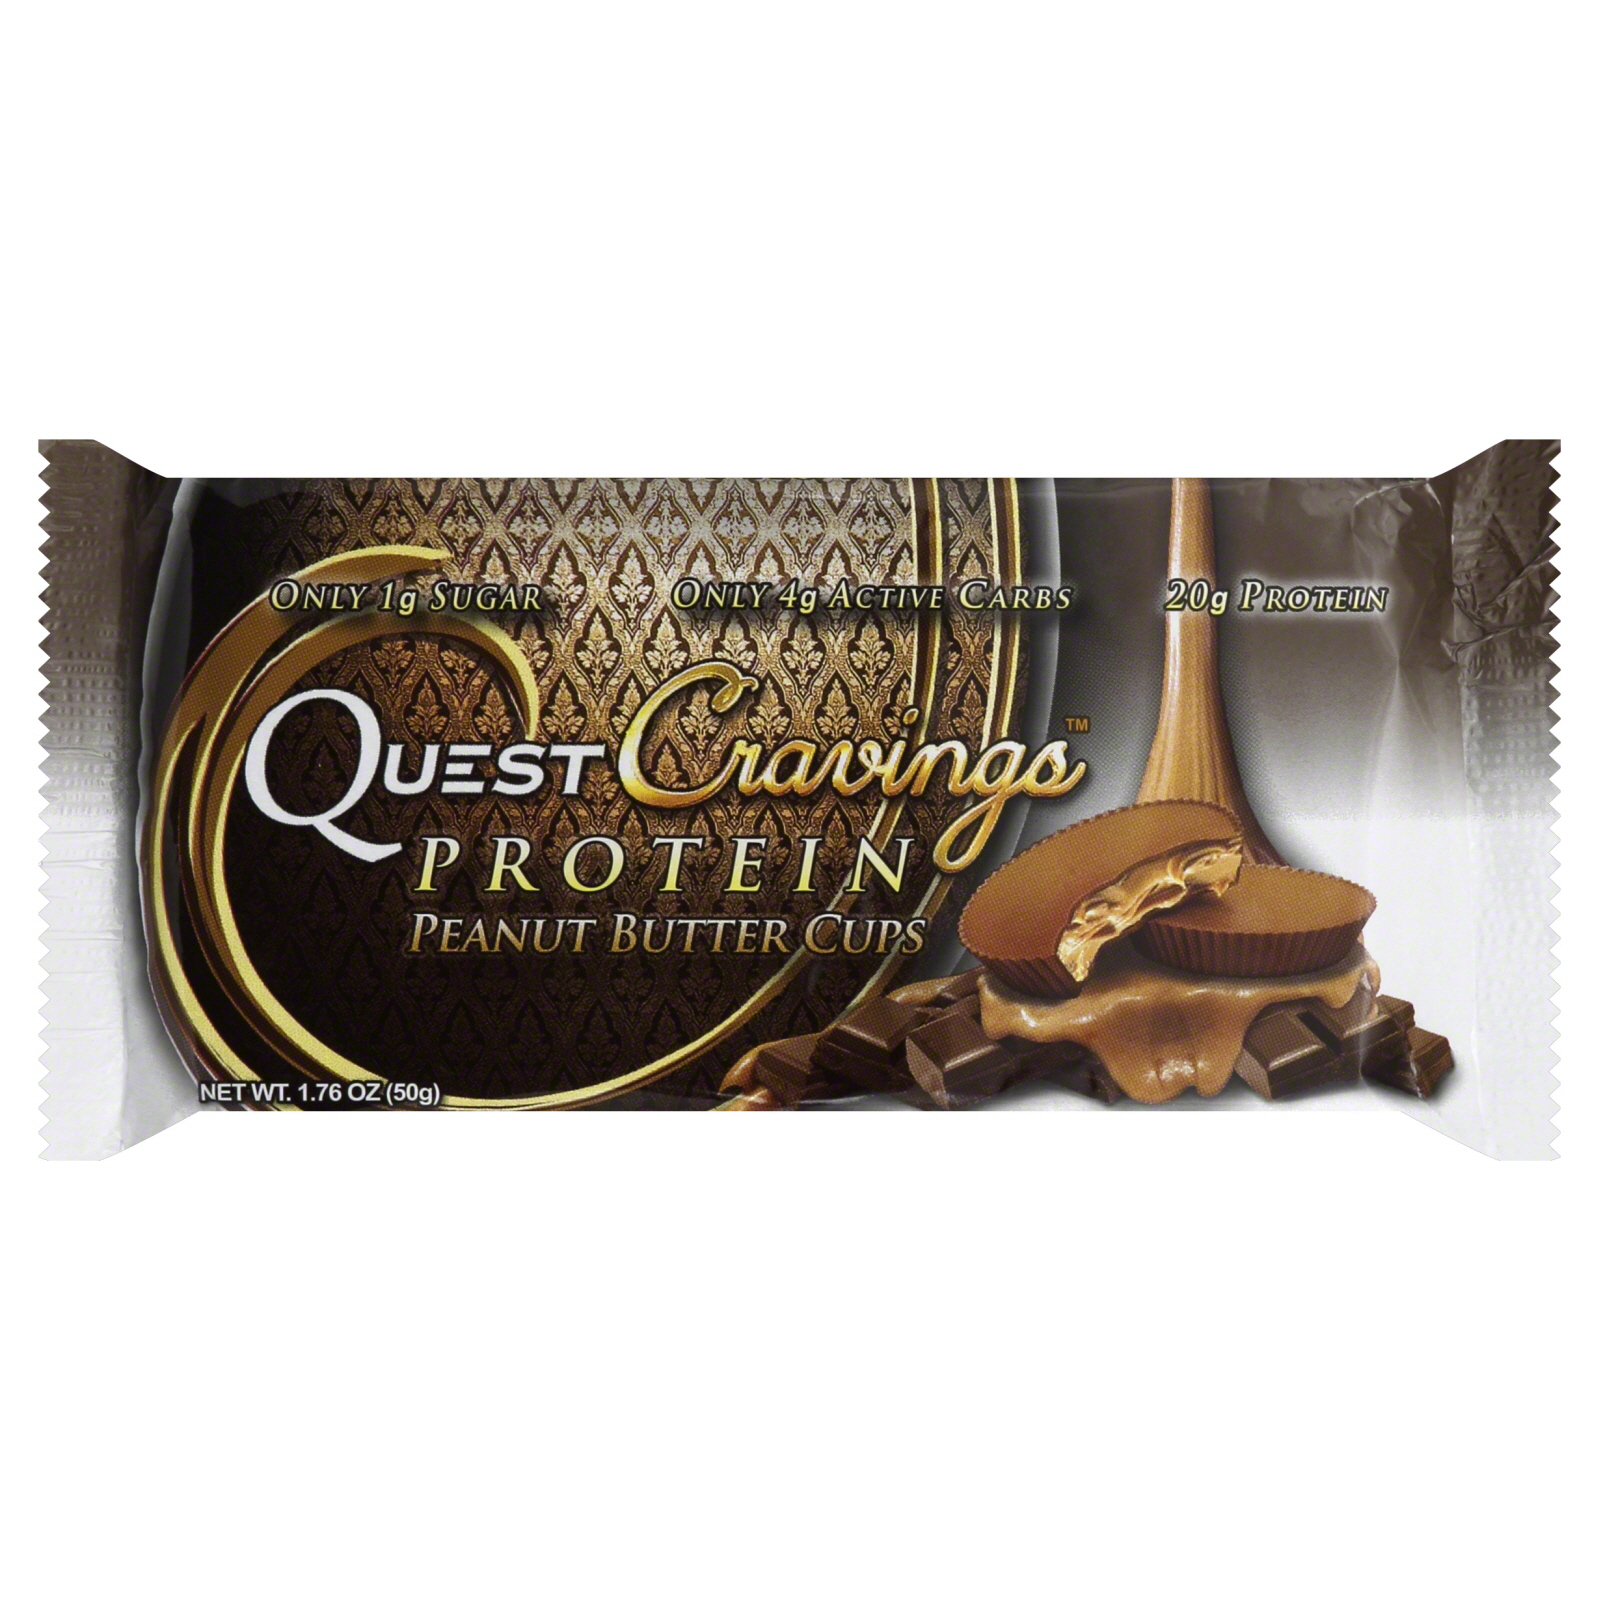 Quest Nutrition Cravings Bars - Peanut Butter Cup - 1.76 oz - Case of 12